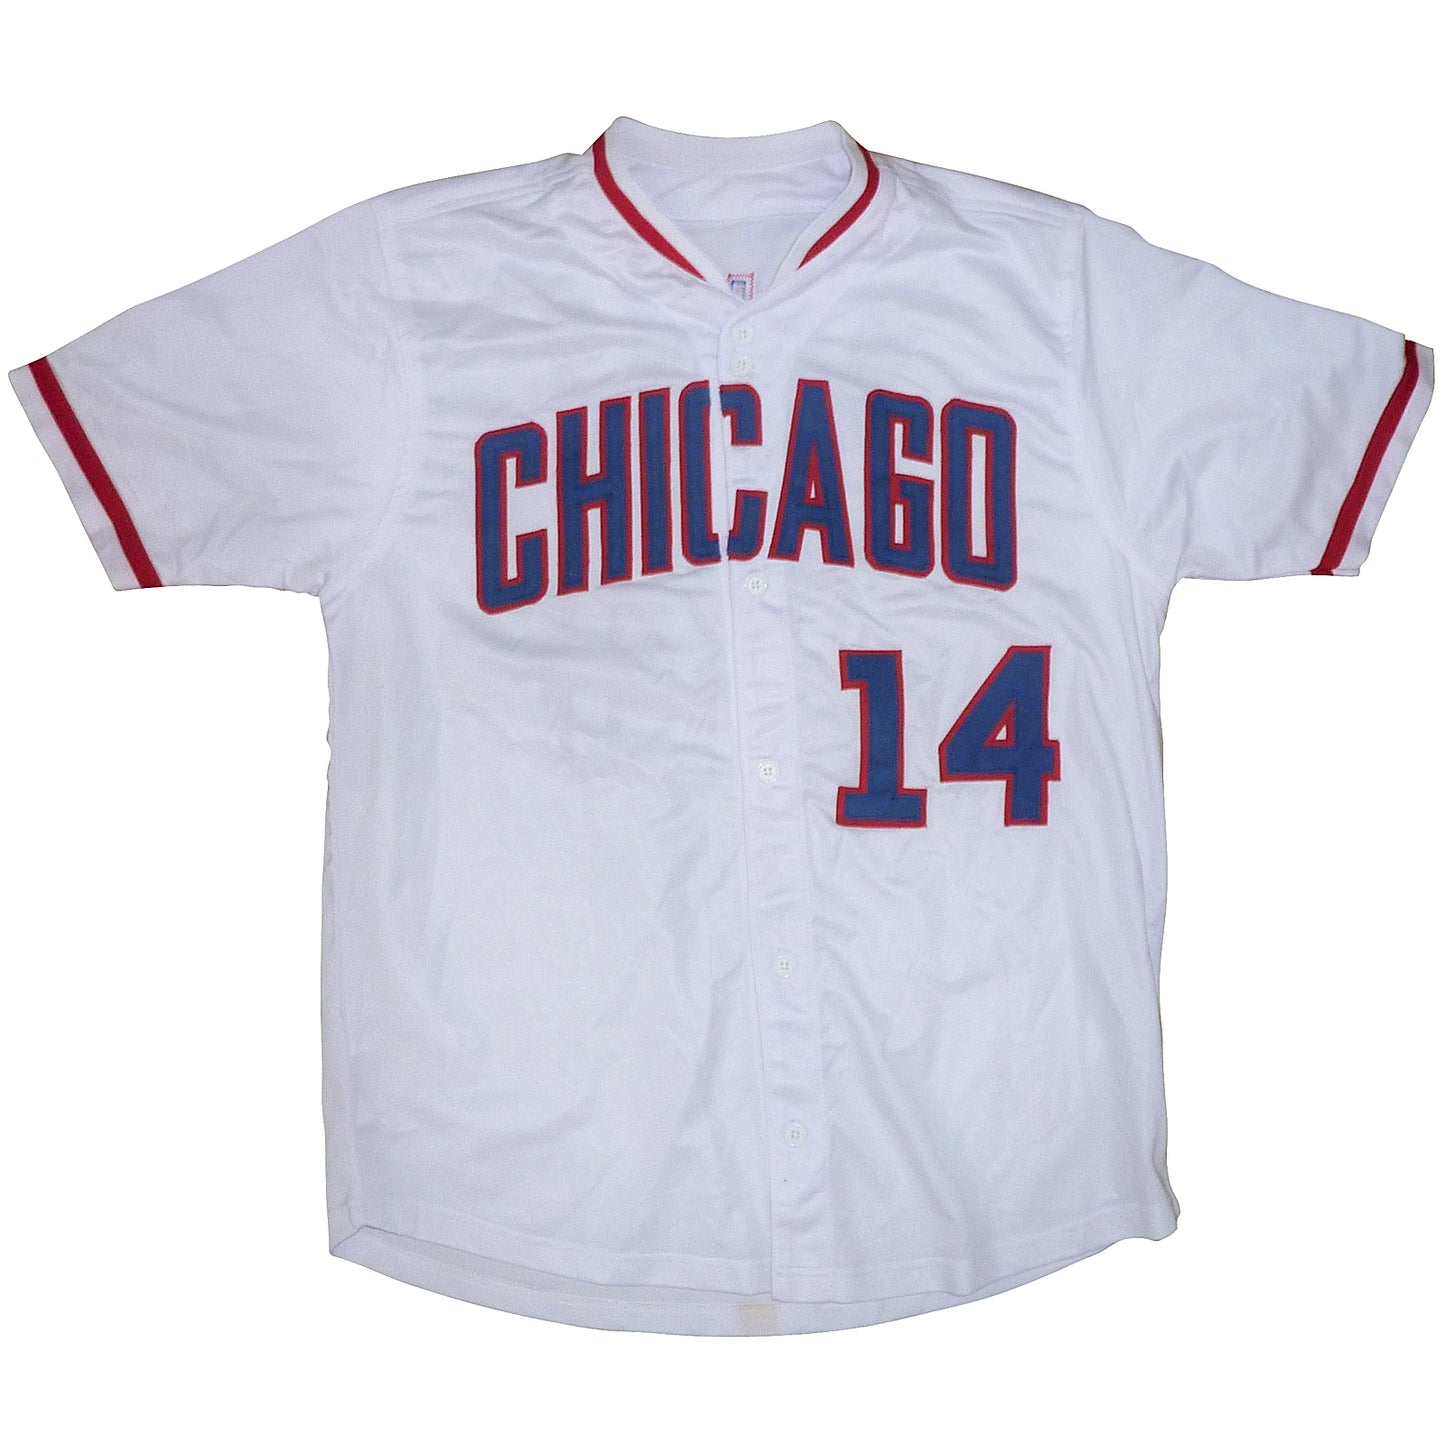 Ernie Banks Chicago Cubs MLB Jerseys for sale